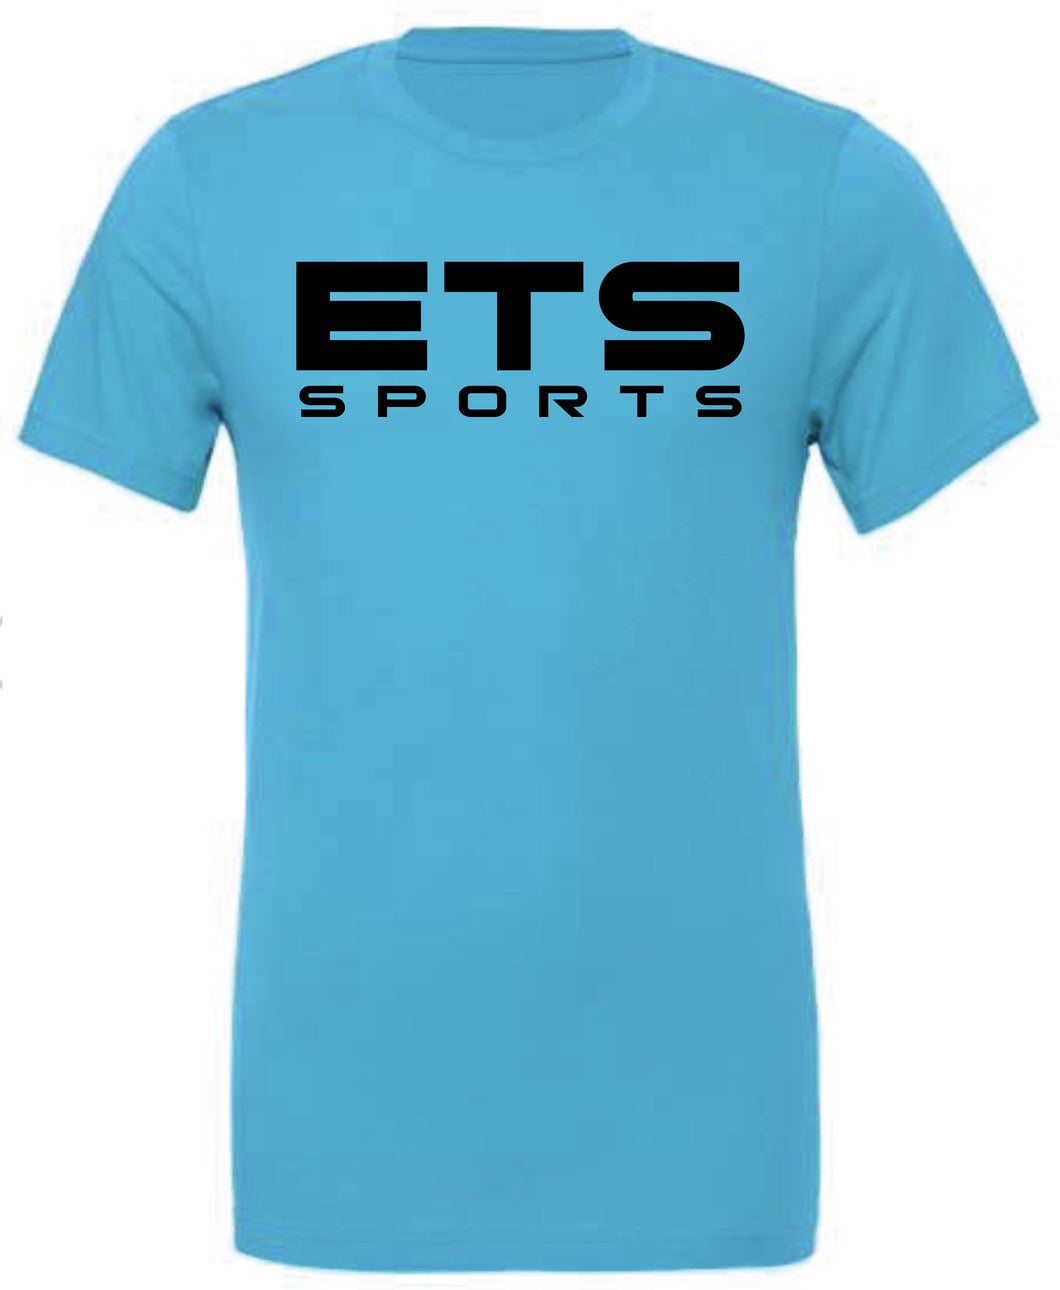 ETS Sports T-shirt